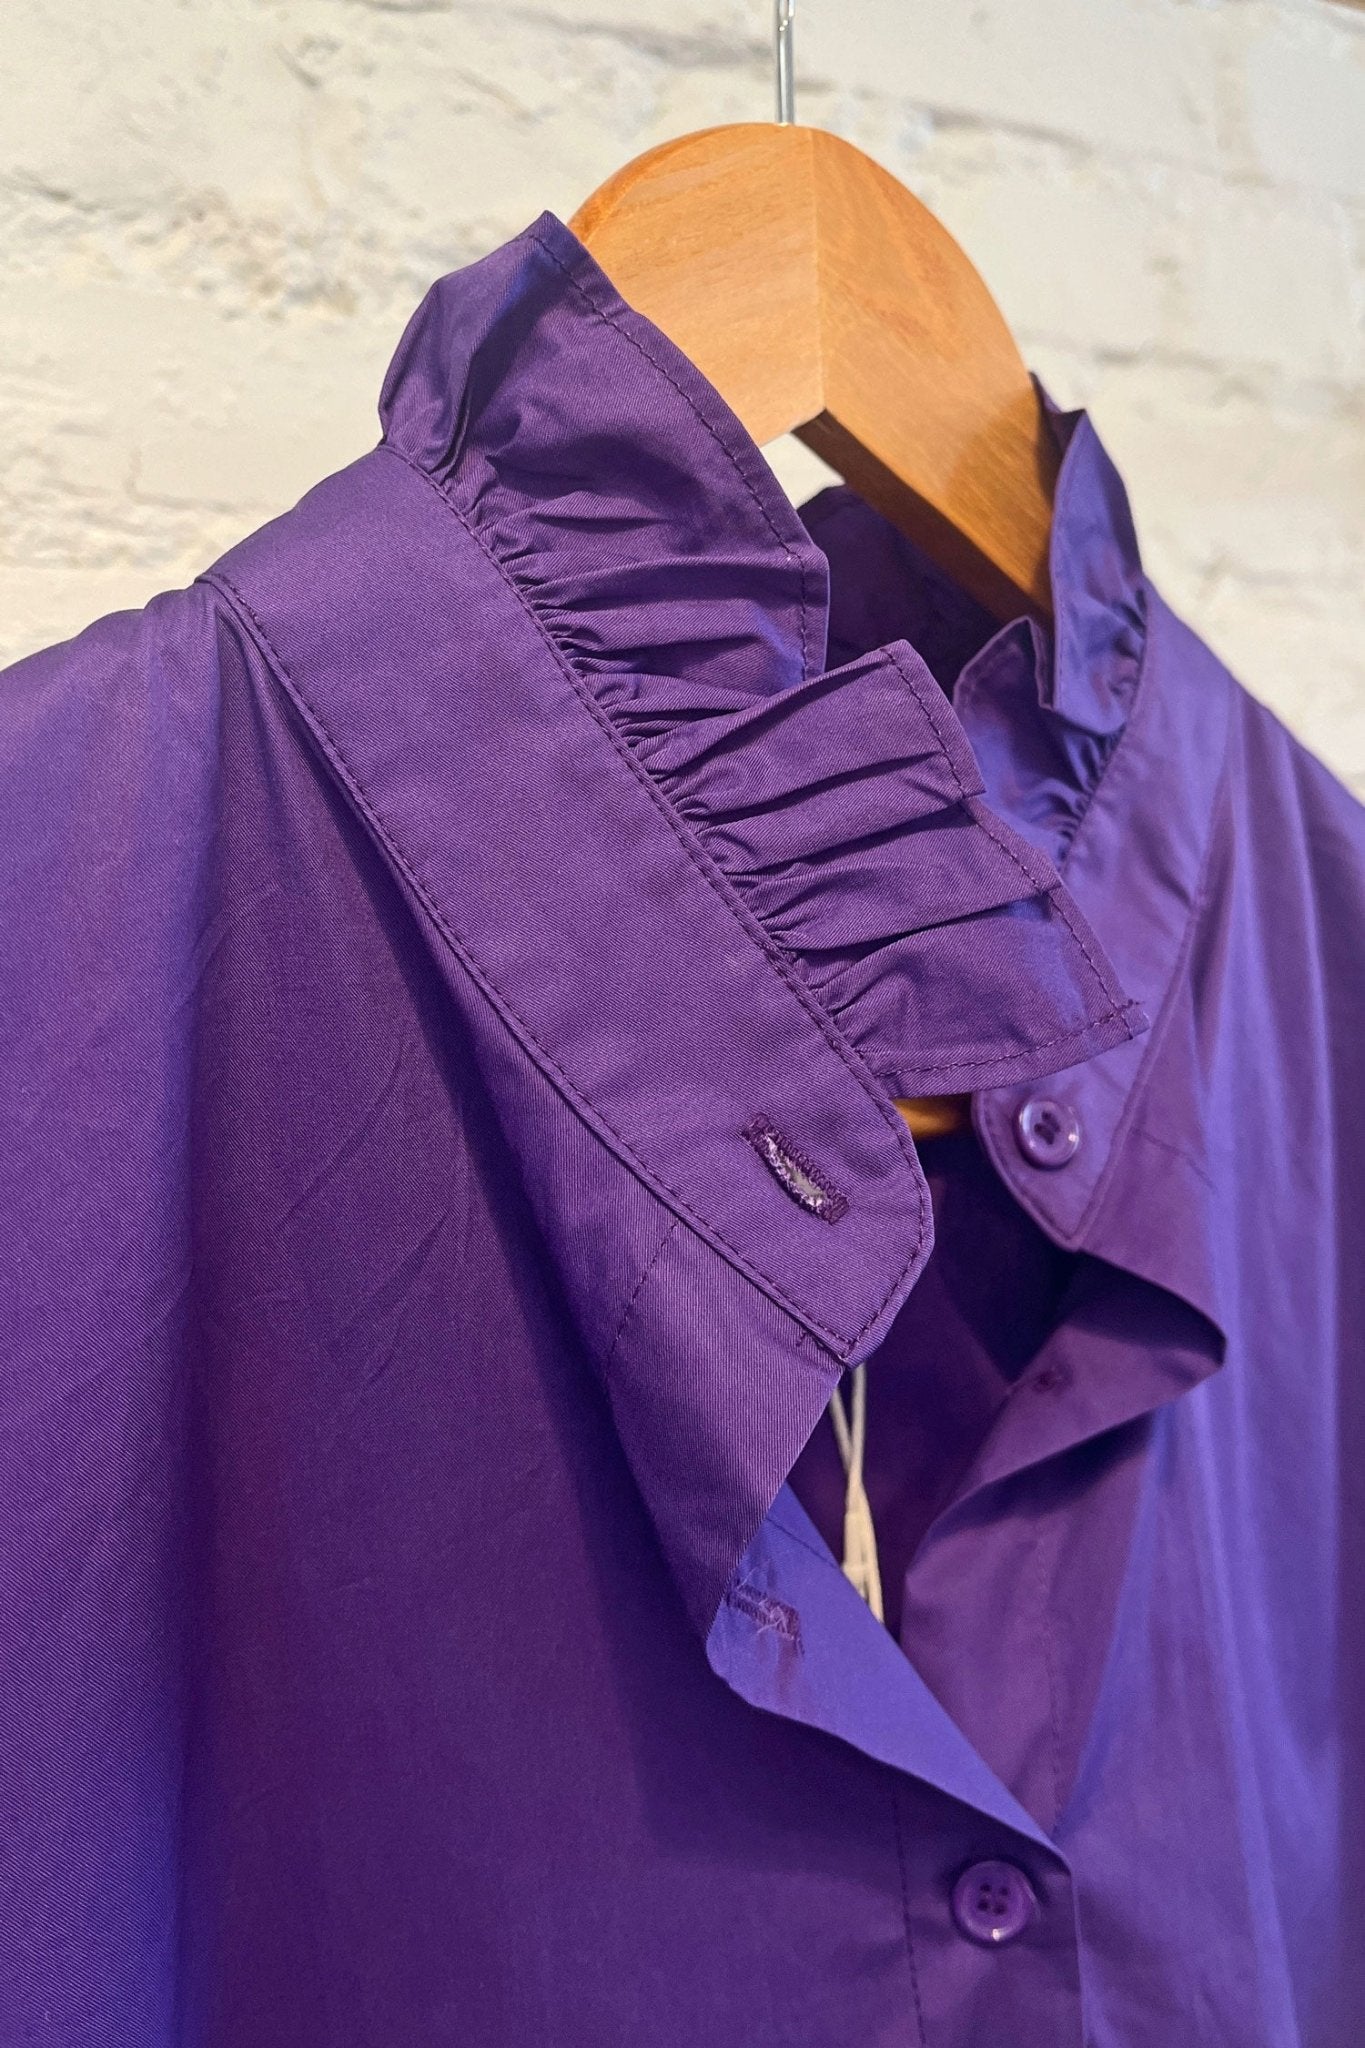 Short Sleeve Ruffle Shirt Purple - Heidi Houston - Color Game